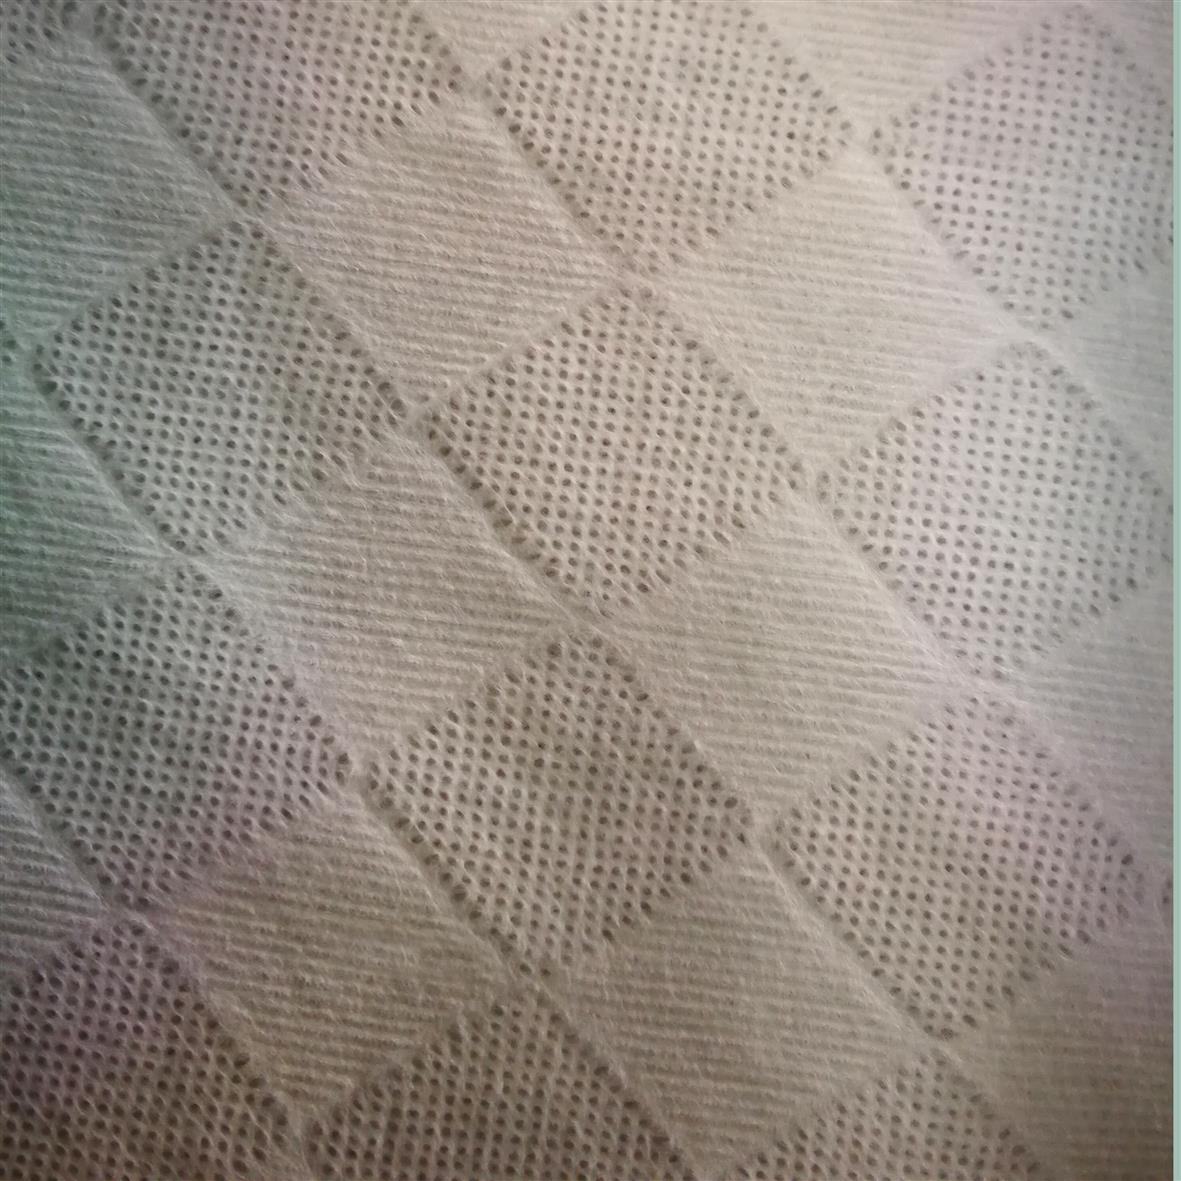 EF纹竹纤维水刺无纺布供应商 竹纤维珍珠纹湿巾布